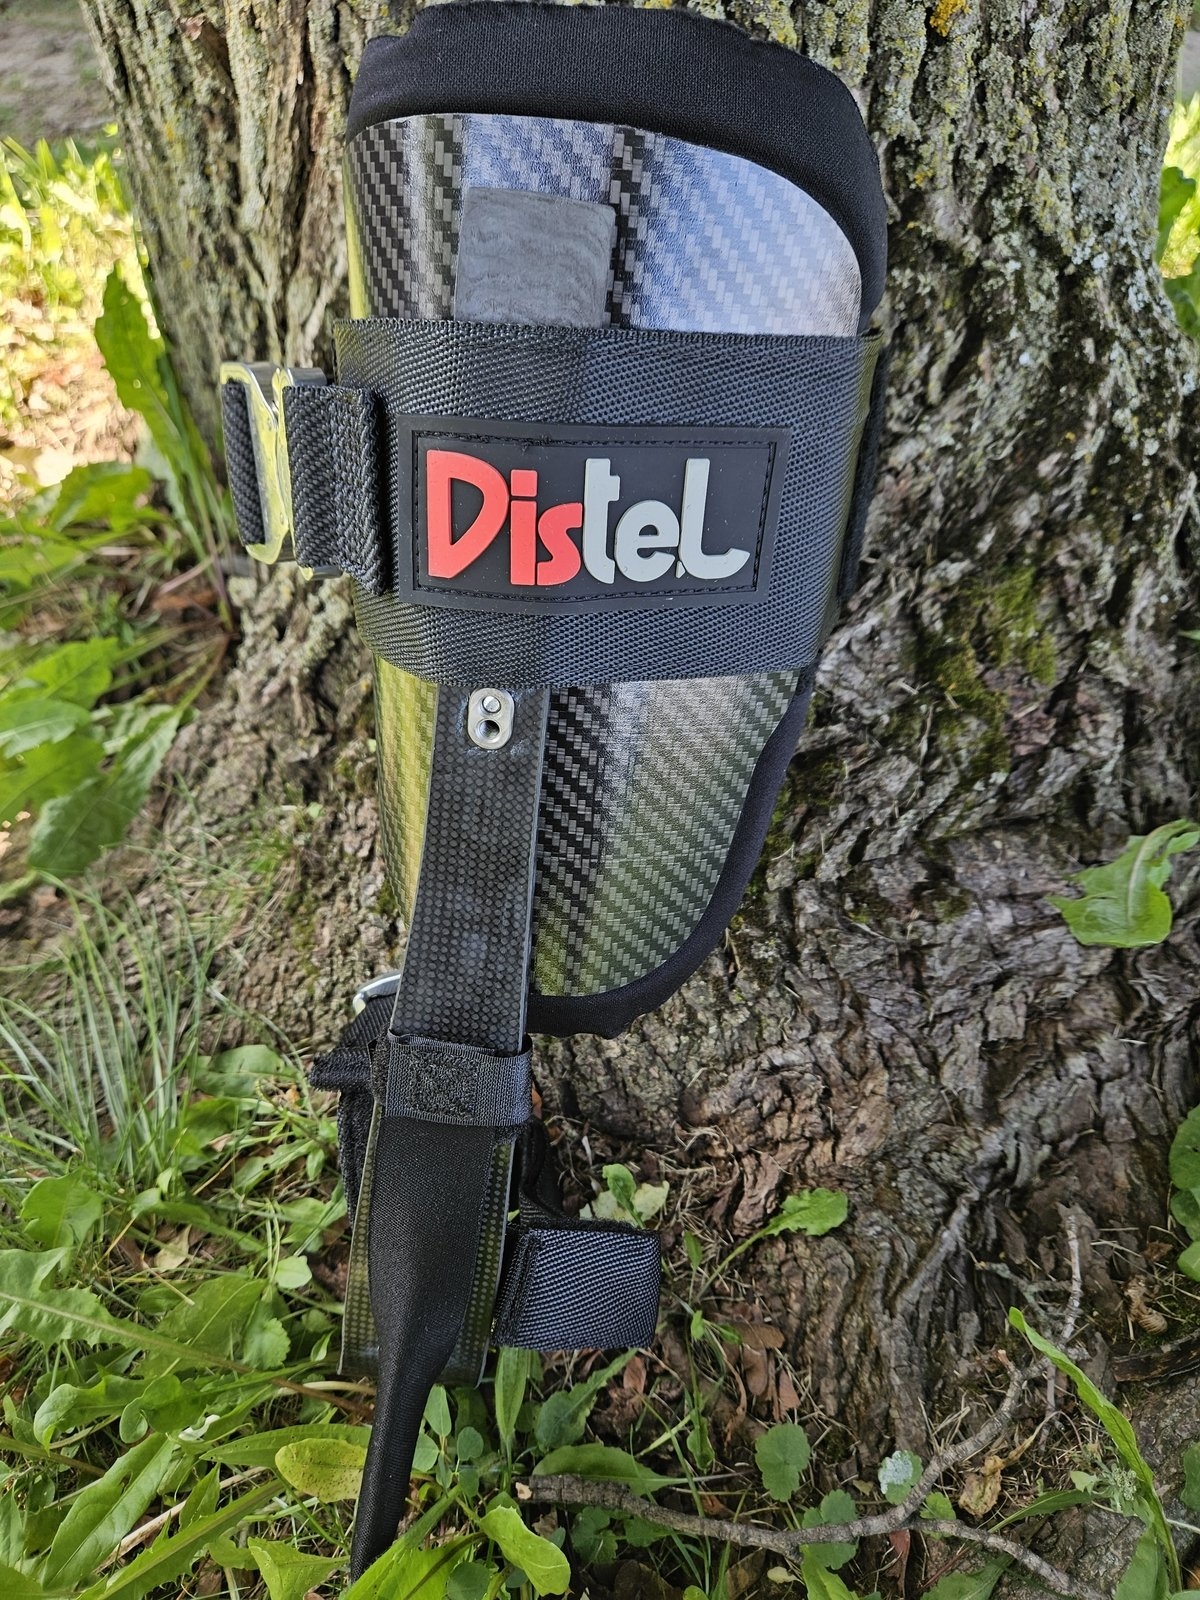 Distel Carbon 3 Climbers